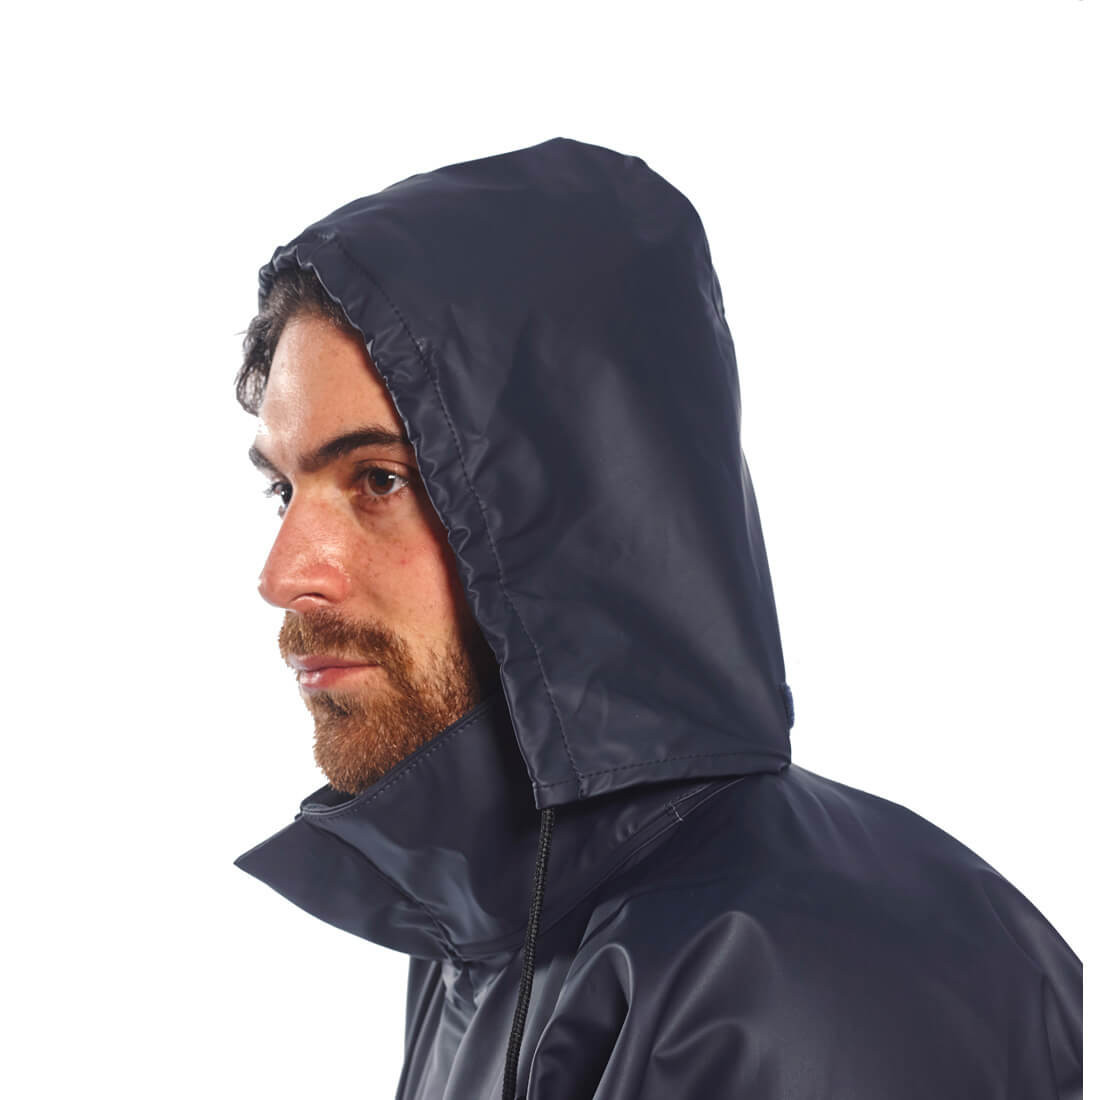 Sealtex Flame Jacket - Safetywear